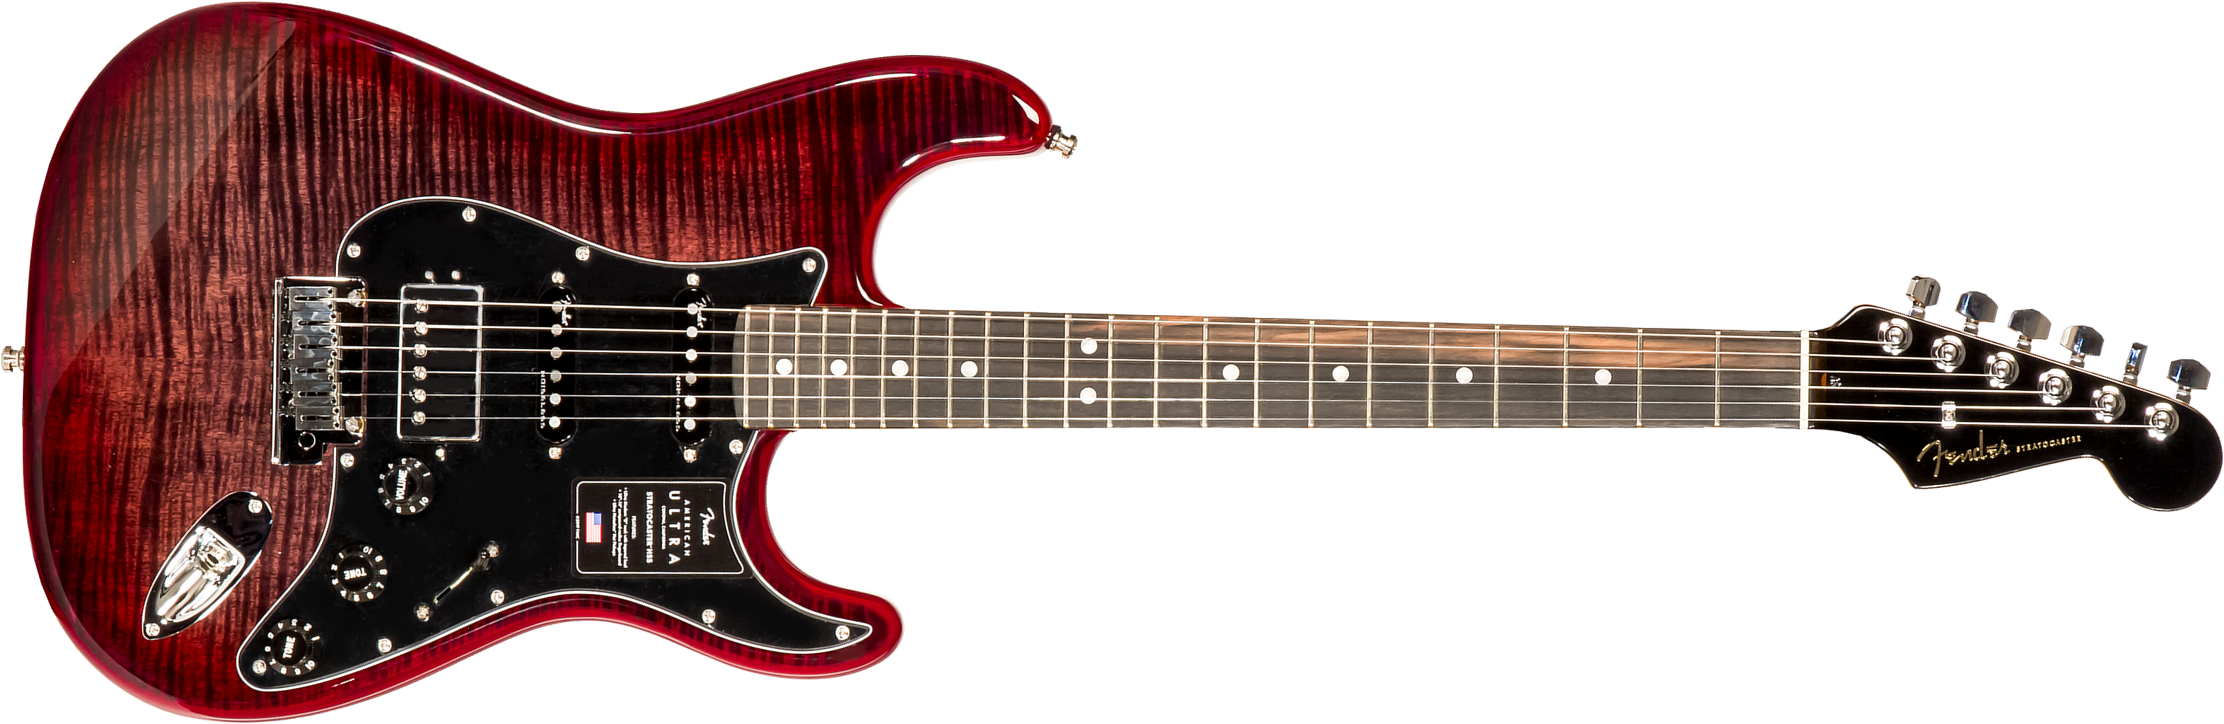 Fender Strat American Ultra Ltd Usa Hss Trem Eb - Umbra - Str shape electric guitar - Main picture